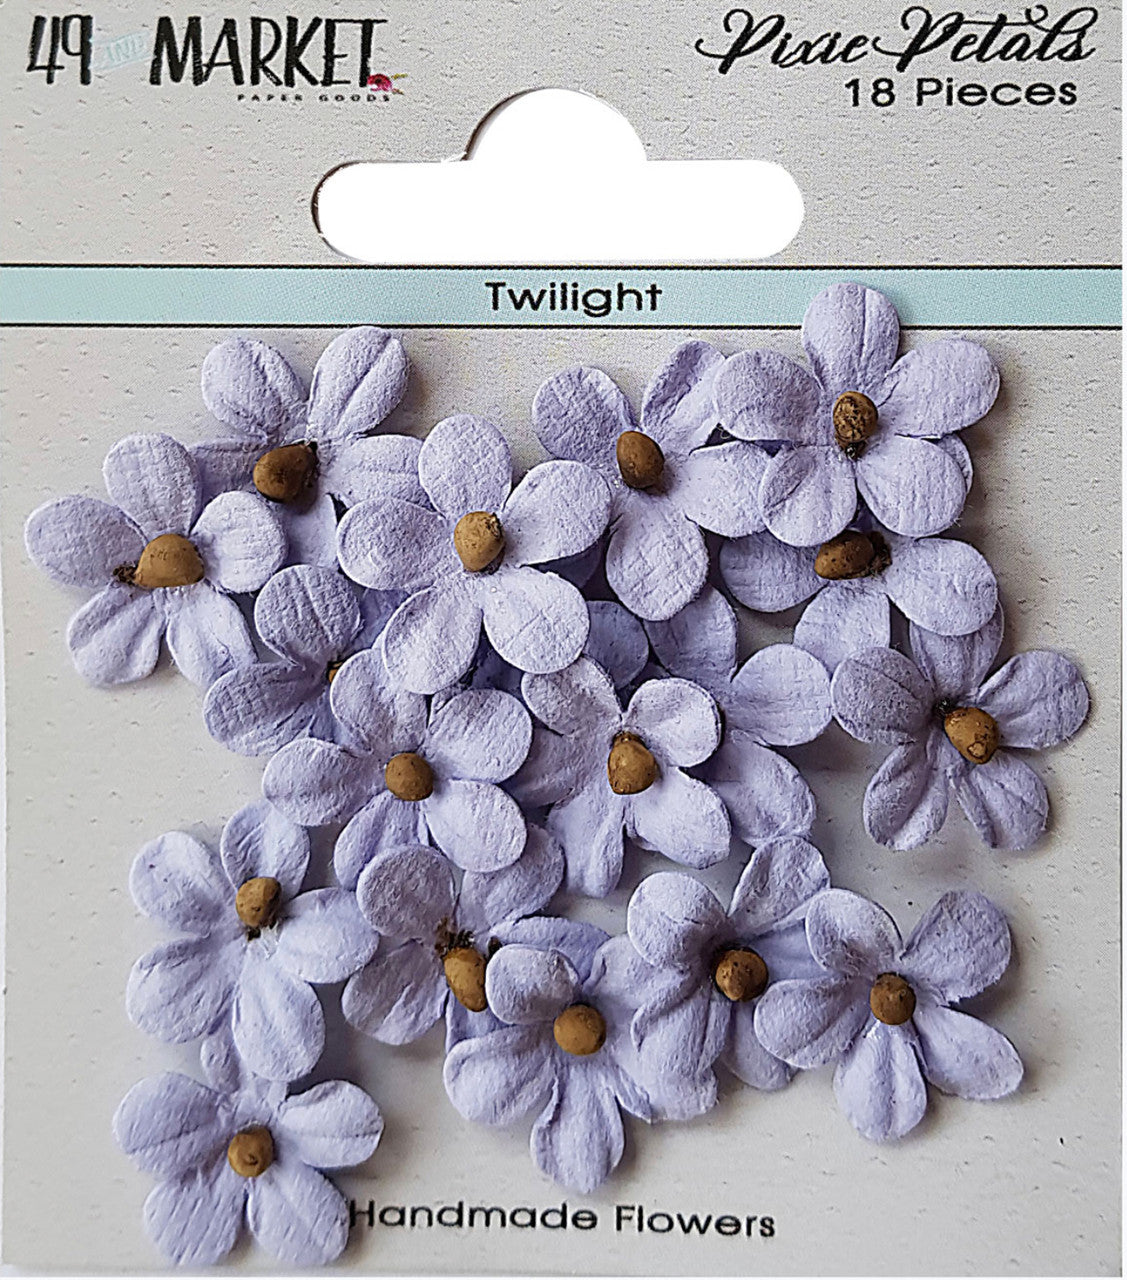 49 en Market Pixie Petals Twilight Flowers